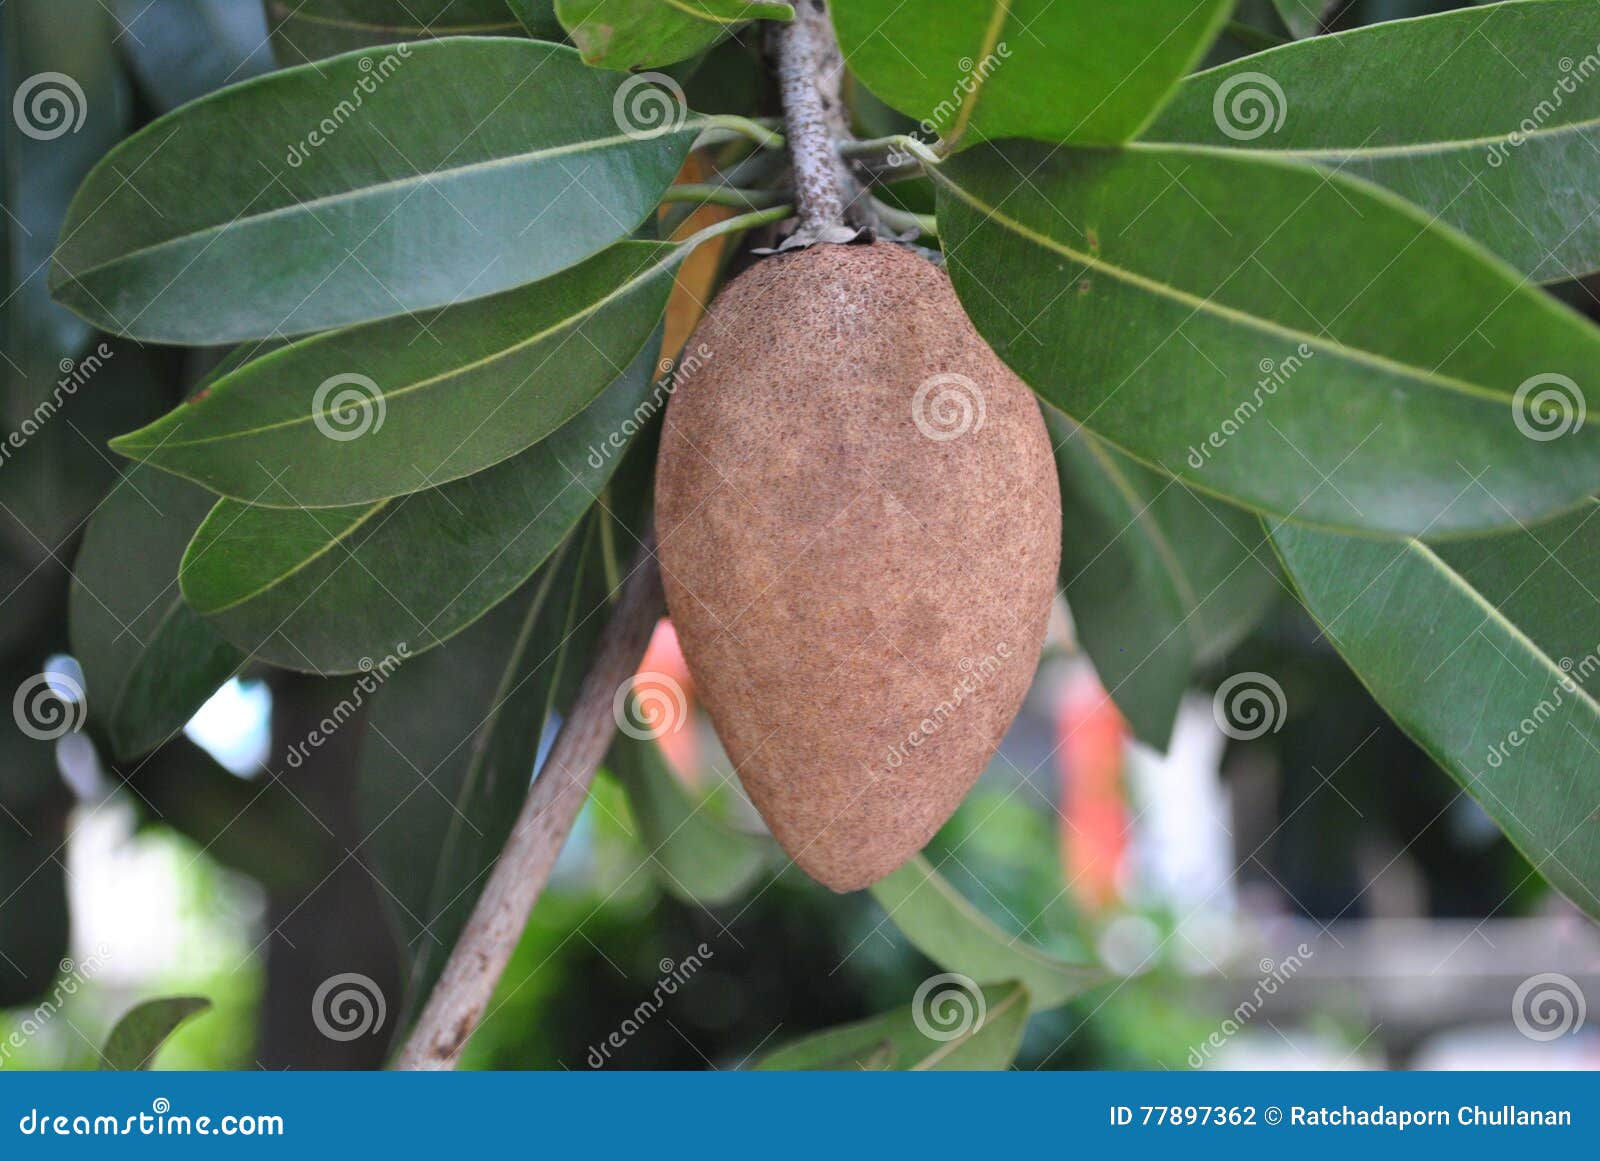 A Sapodilla Fruit On The Tree. Stock Photo - Image of nutritious, fresh